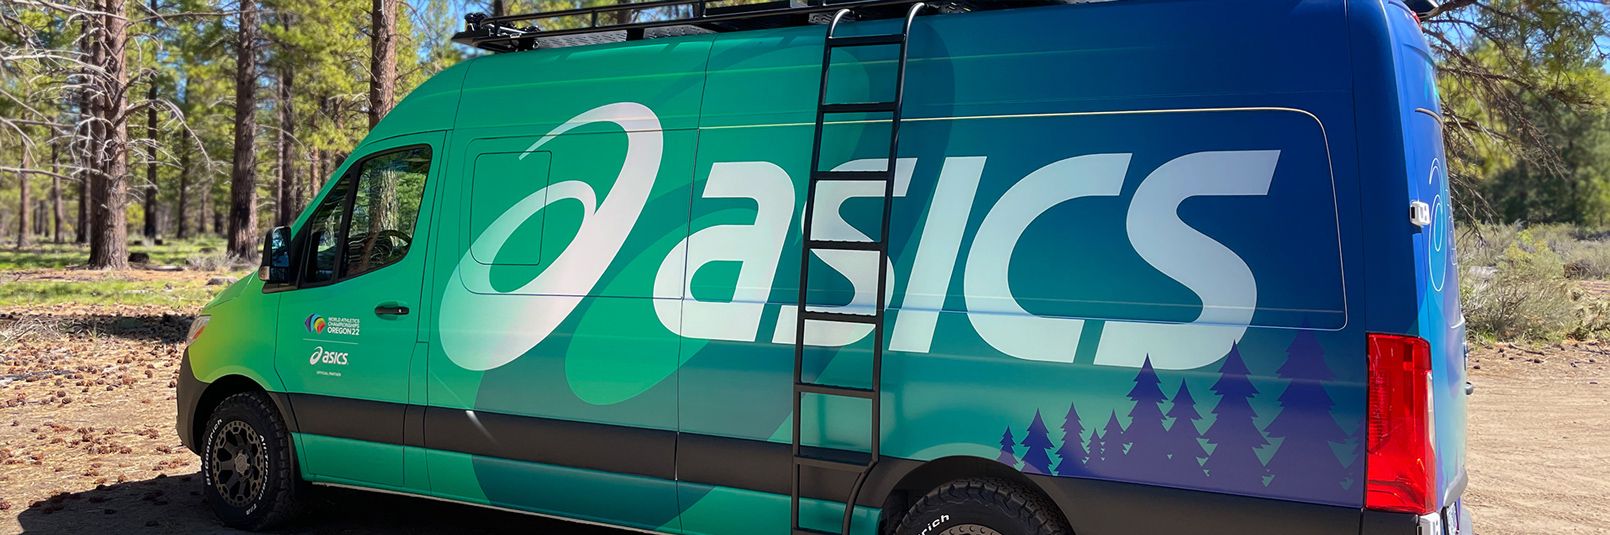 ASICS Uplift Van